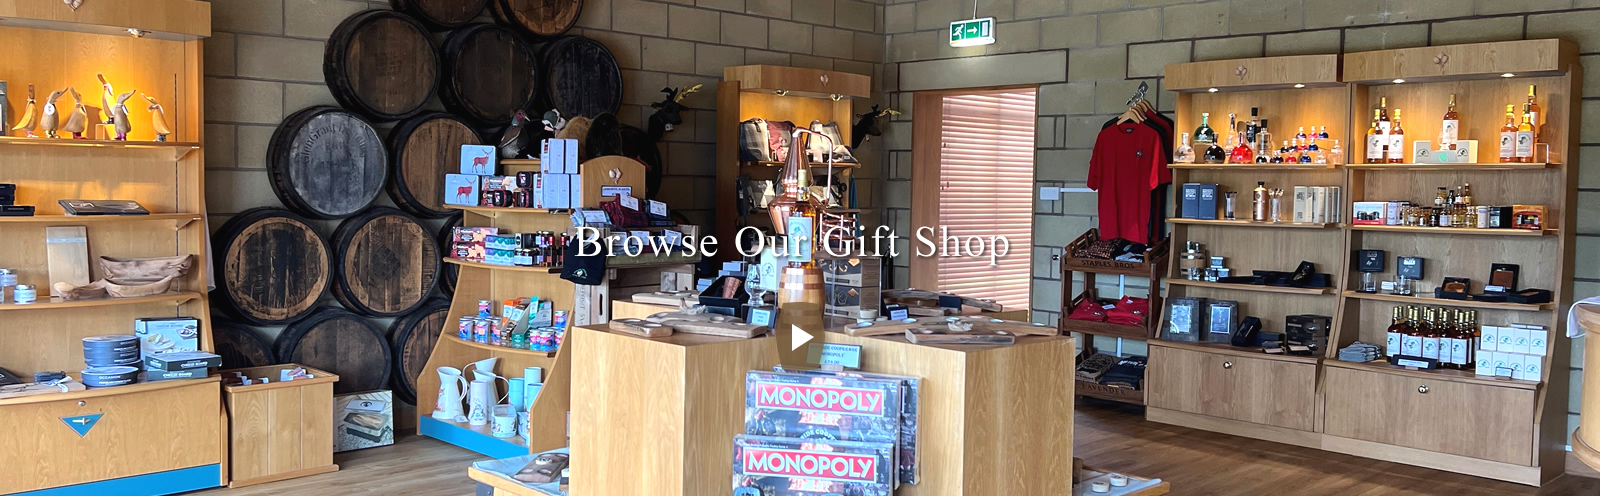 Speyside Cooperage Gift Shop